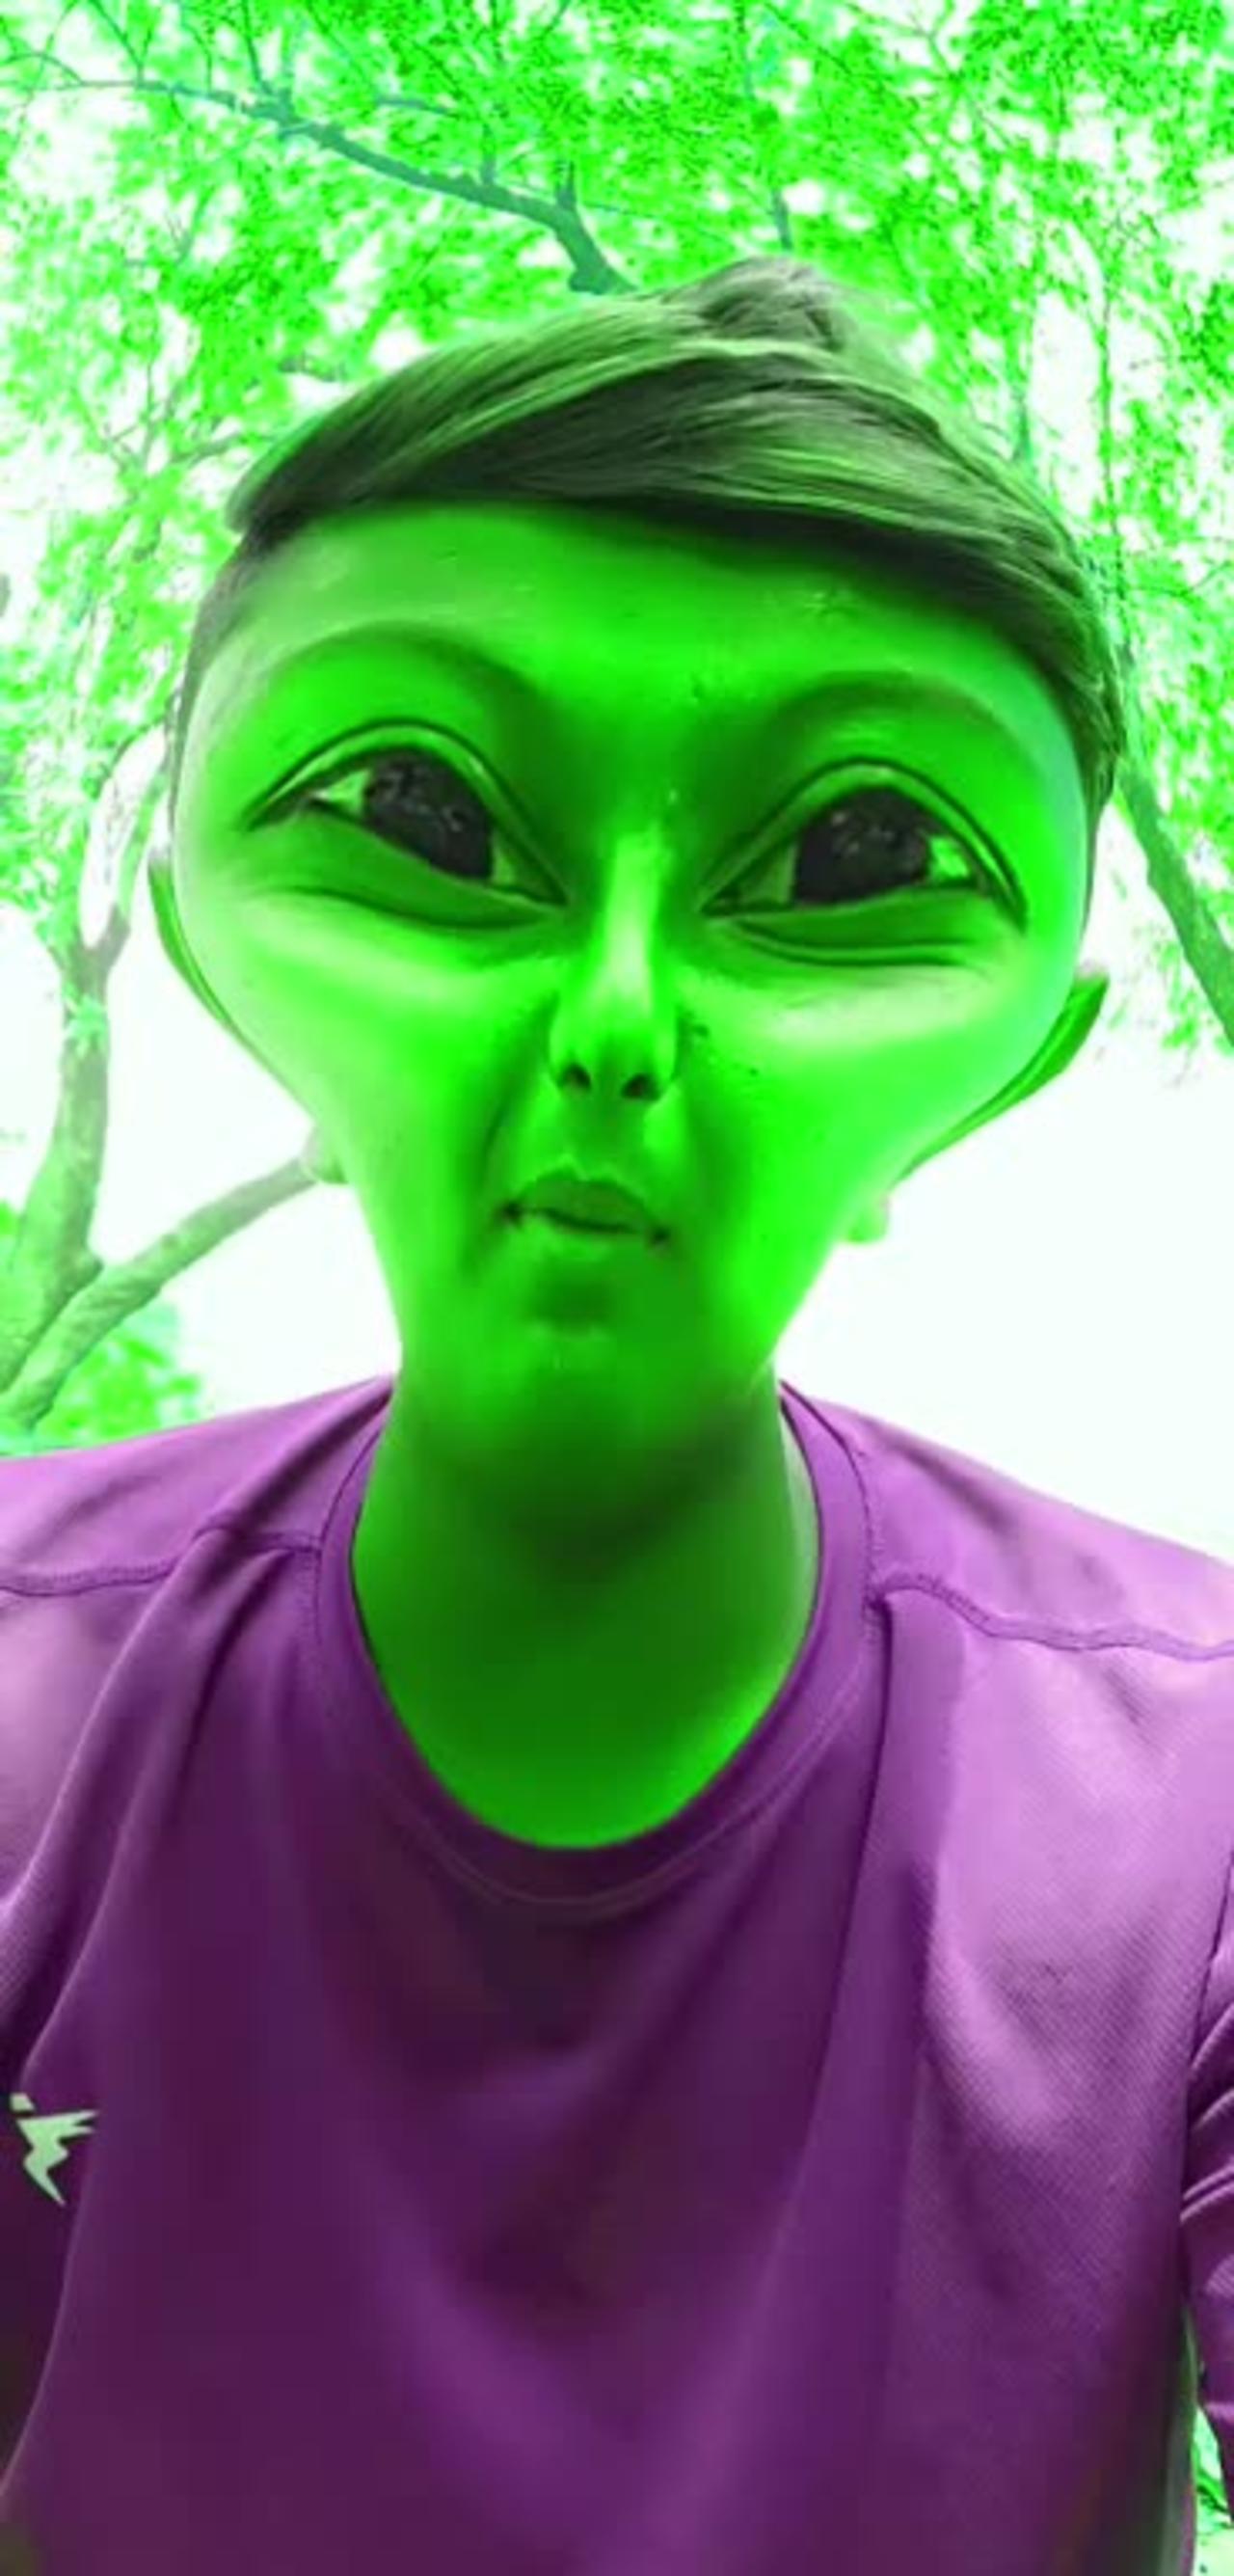 Funny alien 👽